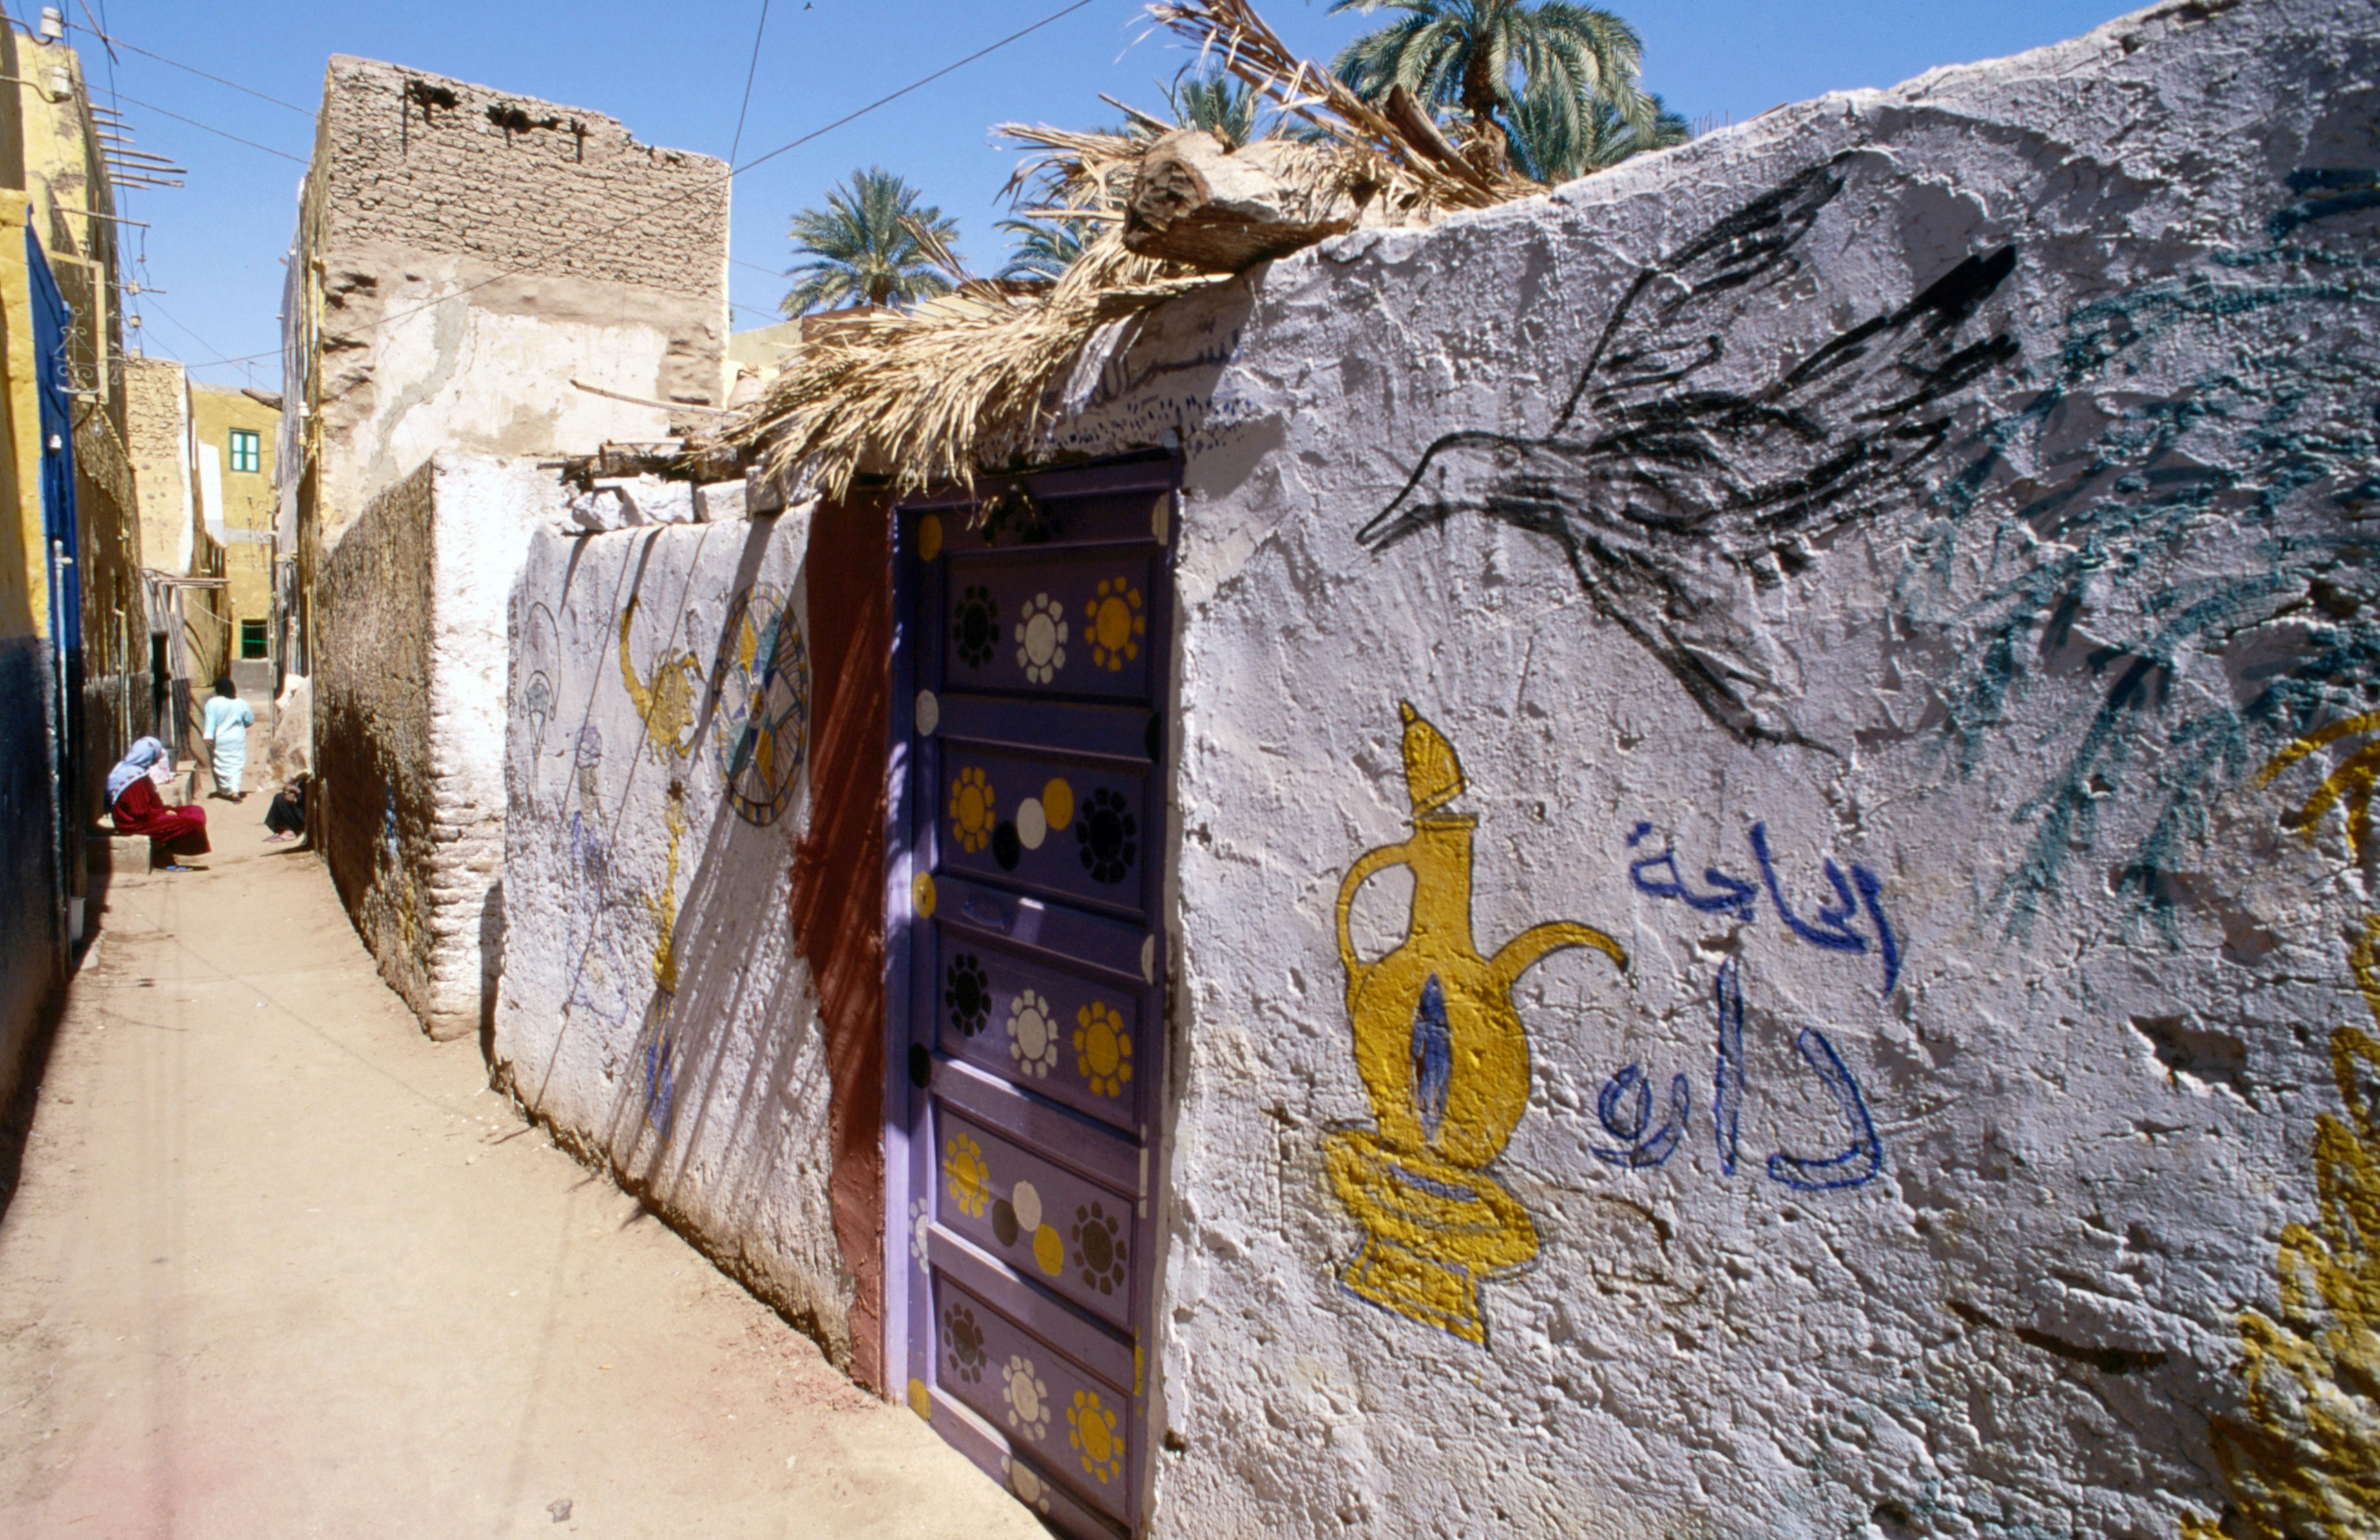 Nubian painted houses on Elephantine Island on River Nile. - stock photo

Aswan, Egypt, North Africa, Africa